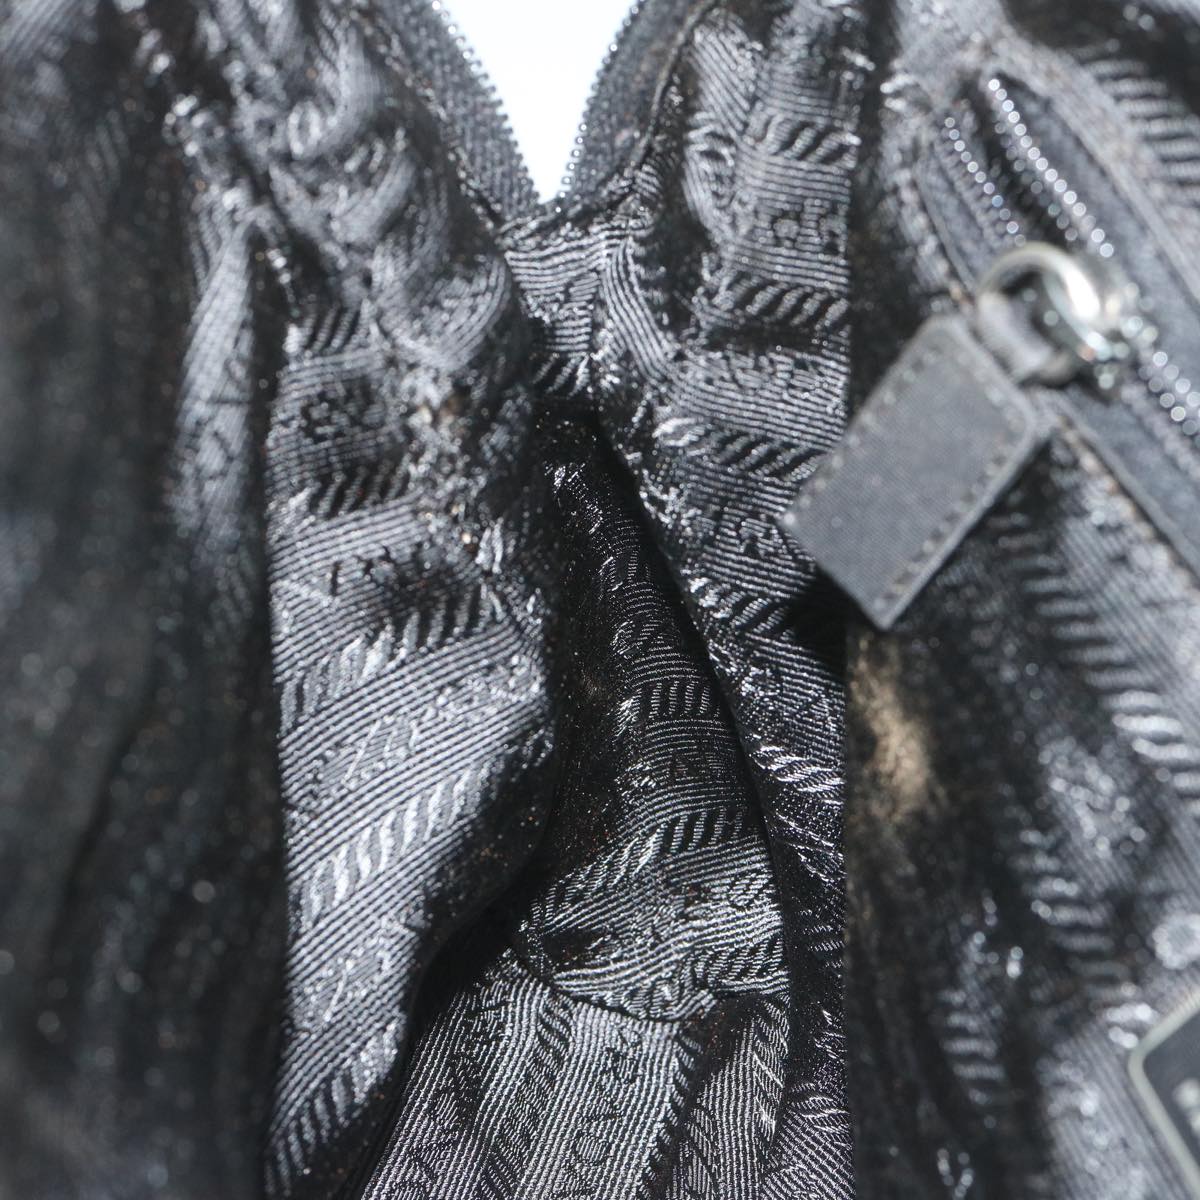 PRADA Hand Bag Nylon Black Auth ep2865